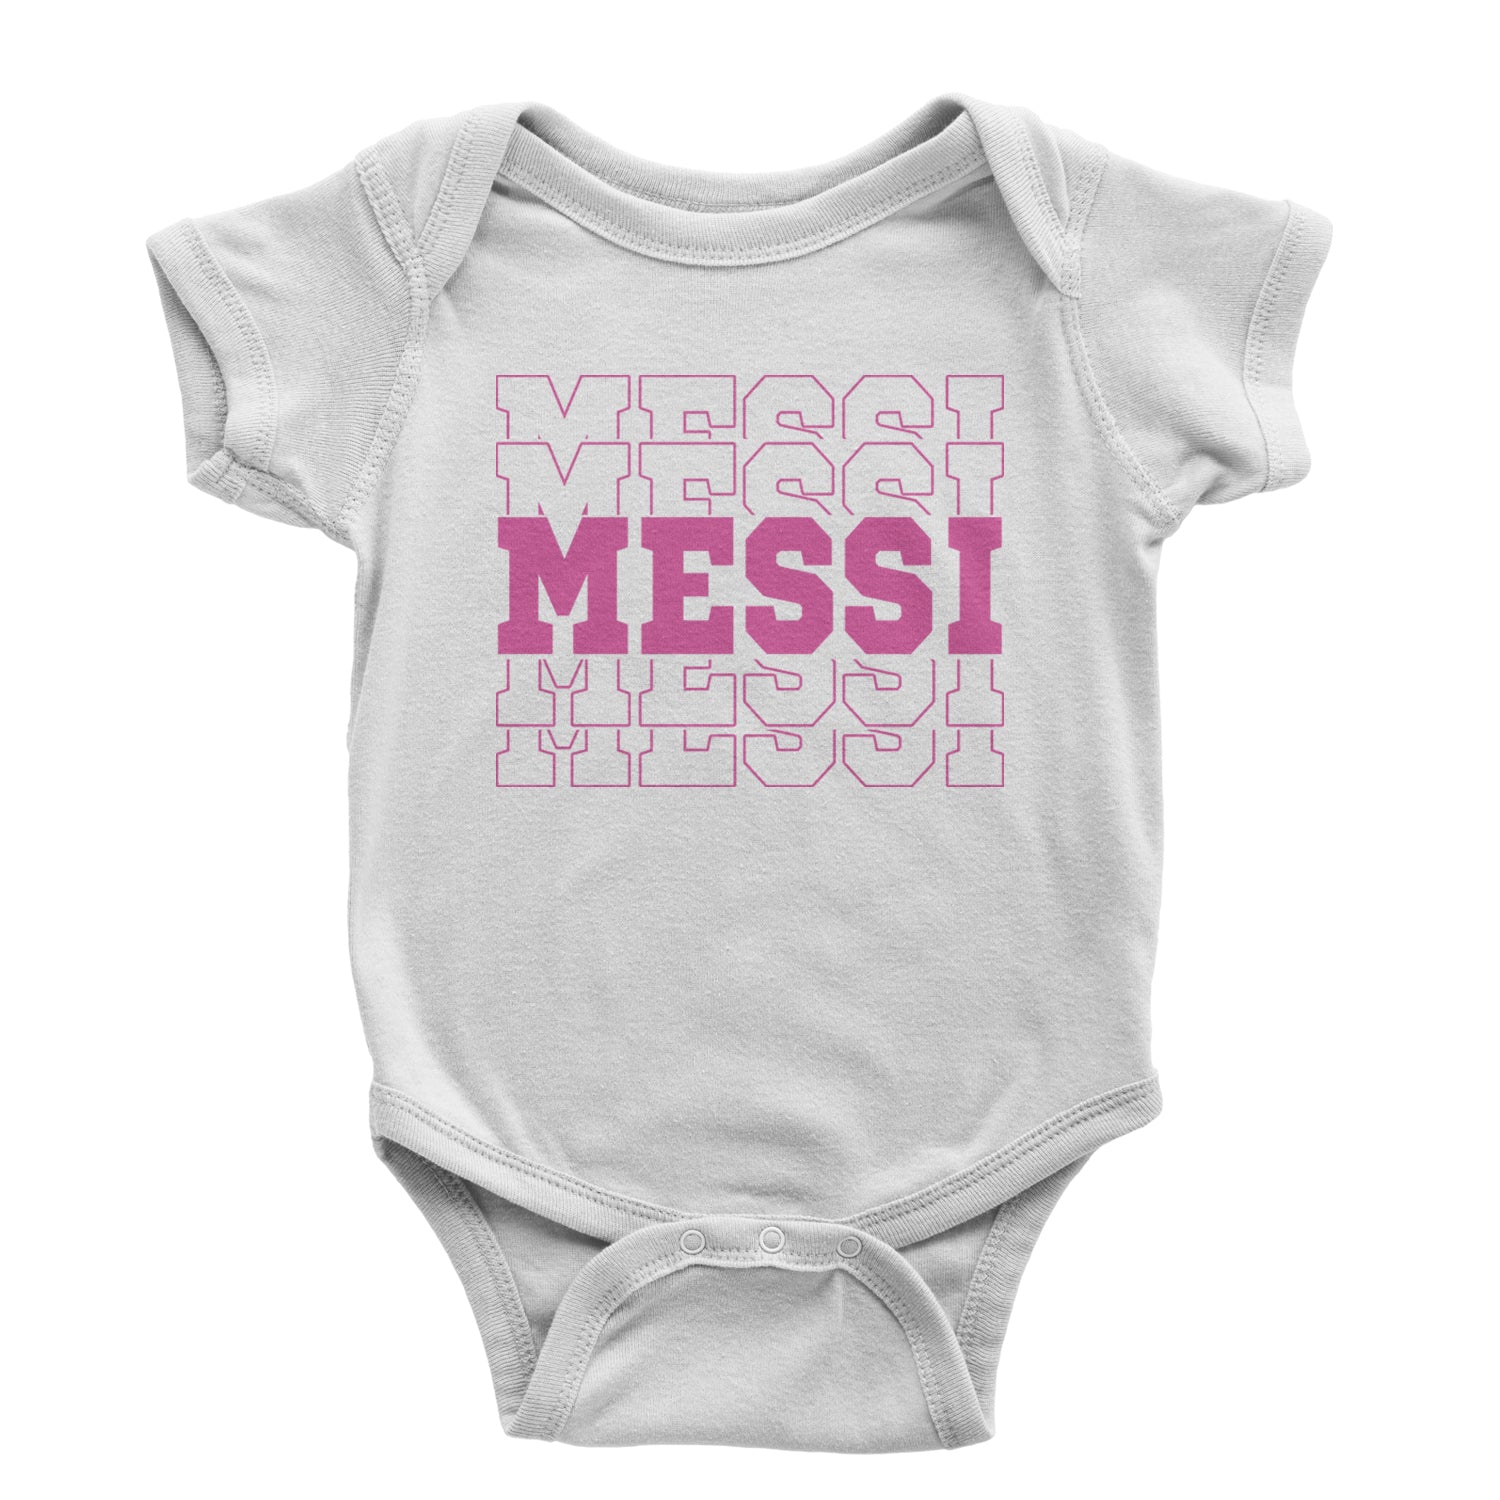 Messi Miami Futbol Infant One-Piece Romper Bodysuit and Toddler T-shirt